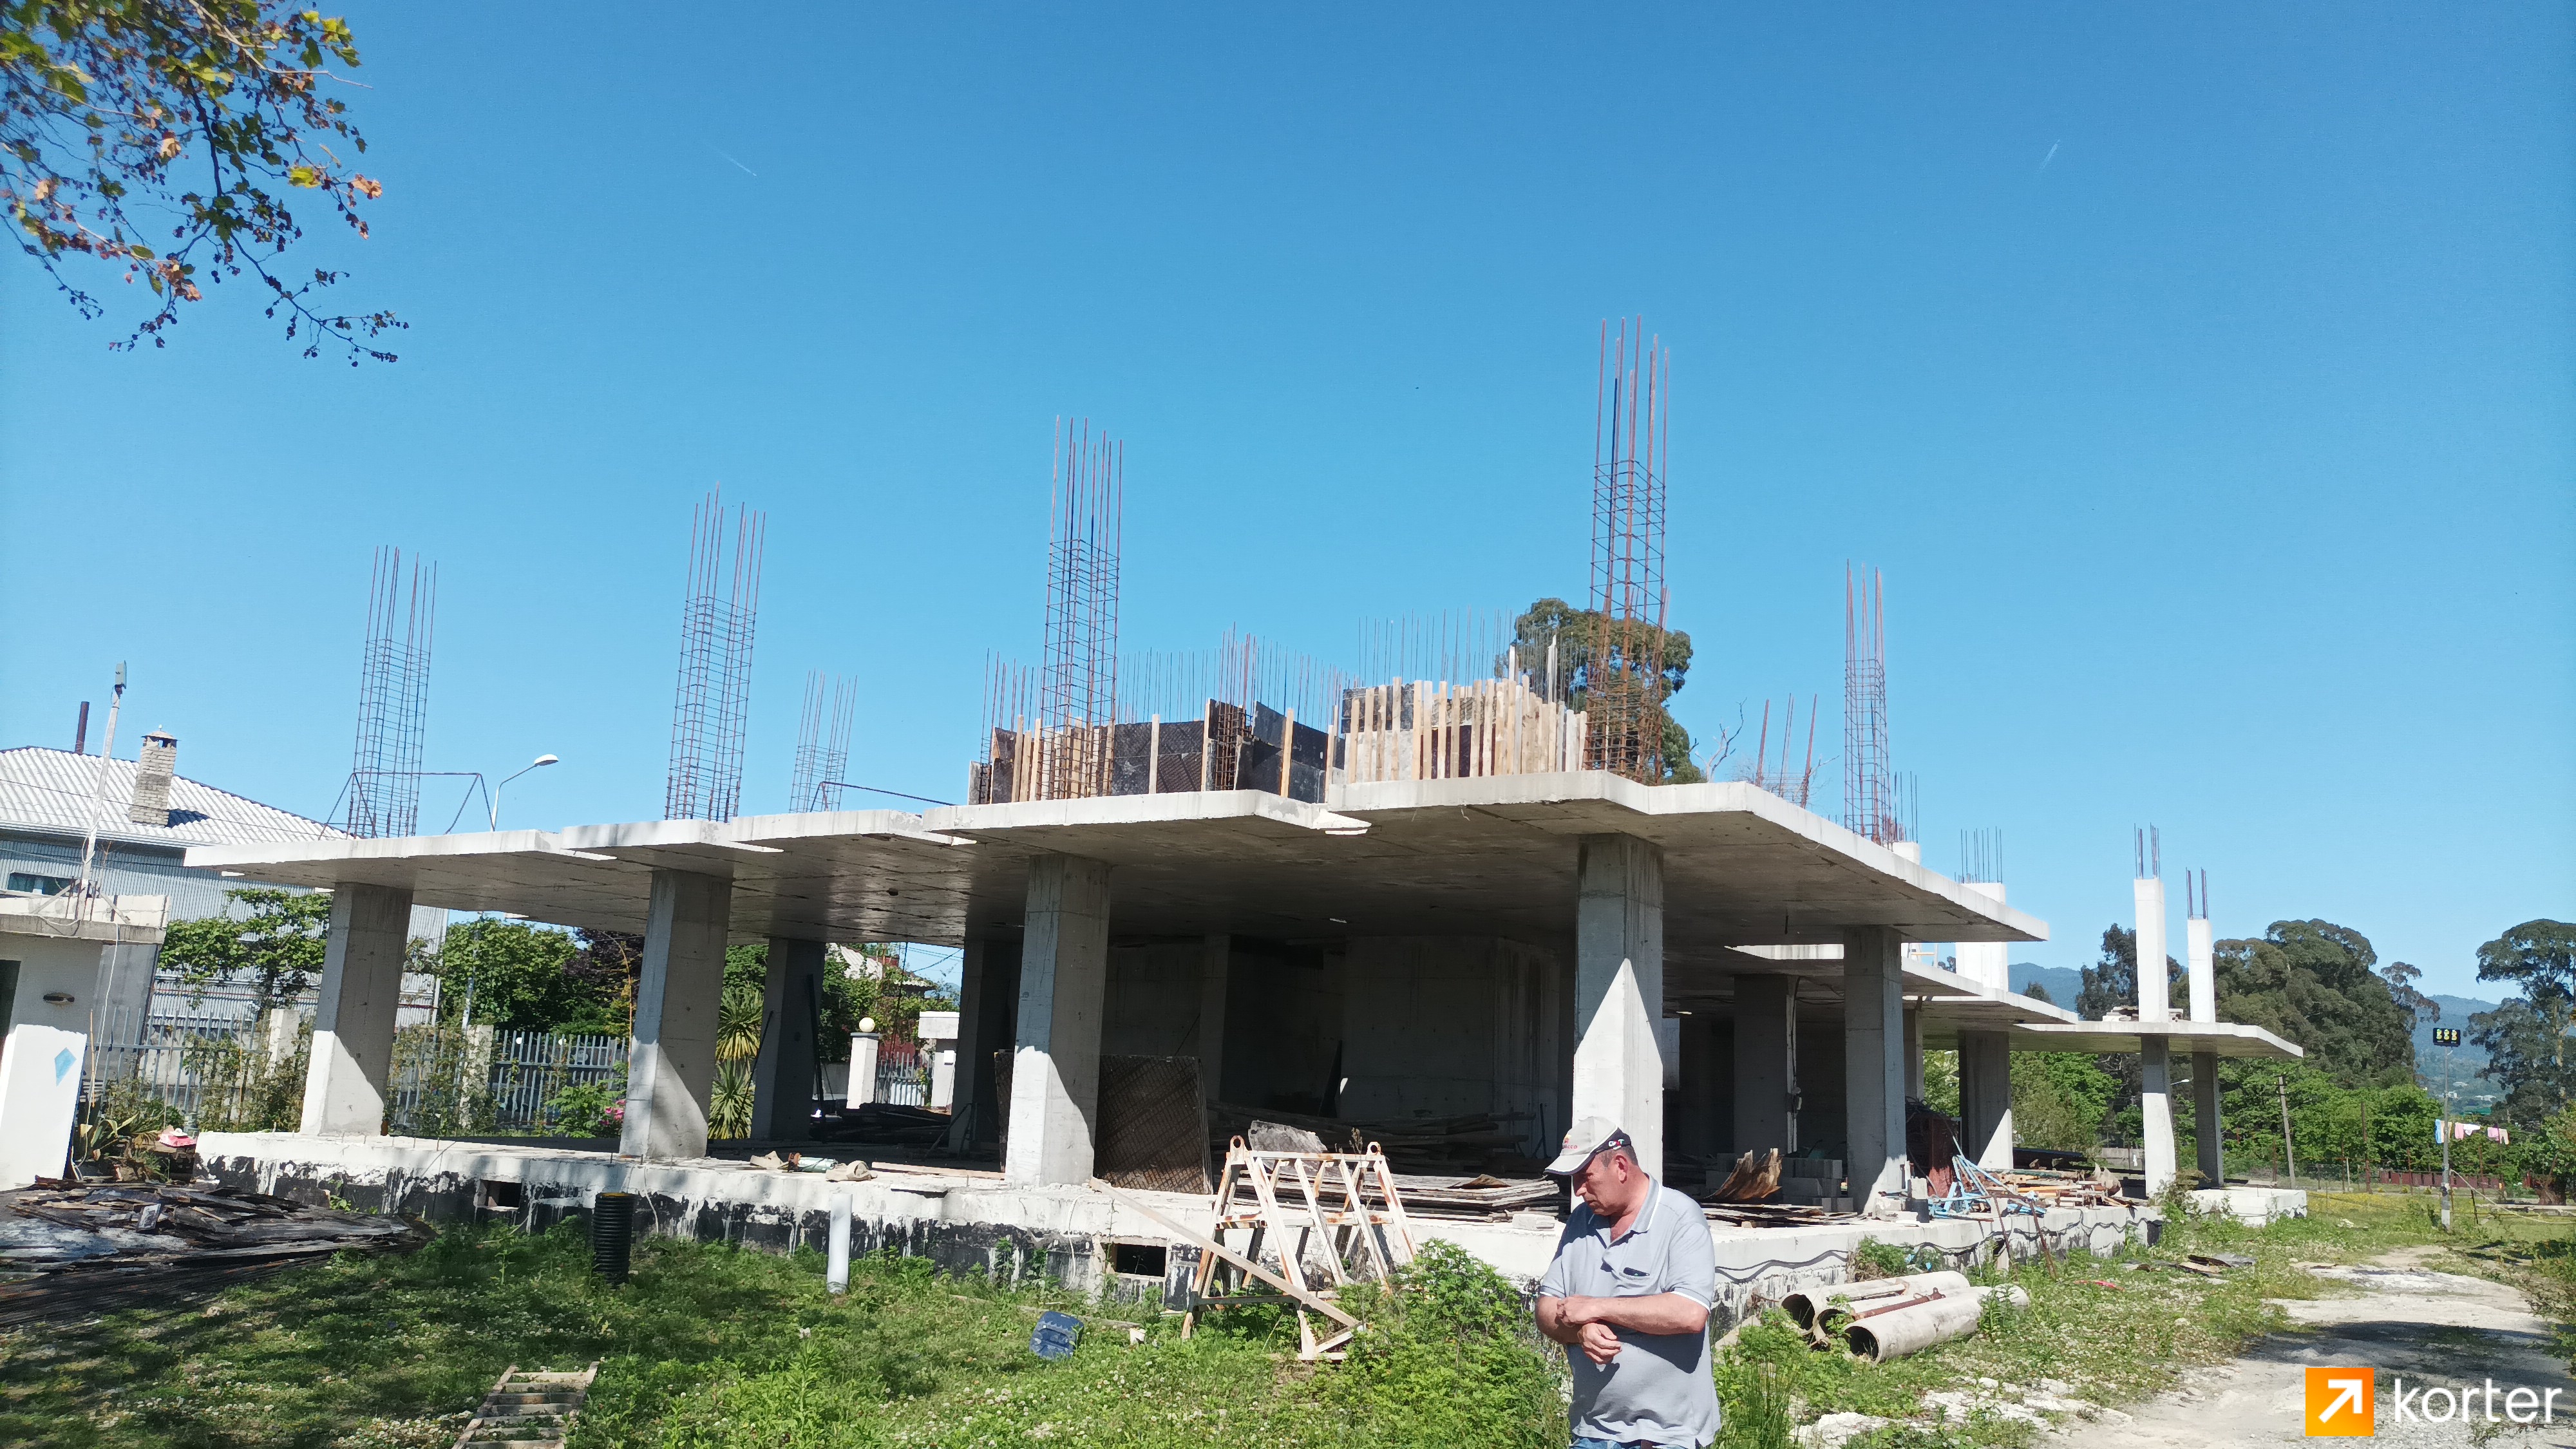 Construction progress Mandarin Garden Batumi - Angle 2, May 2022